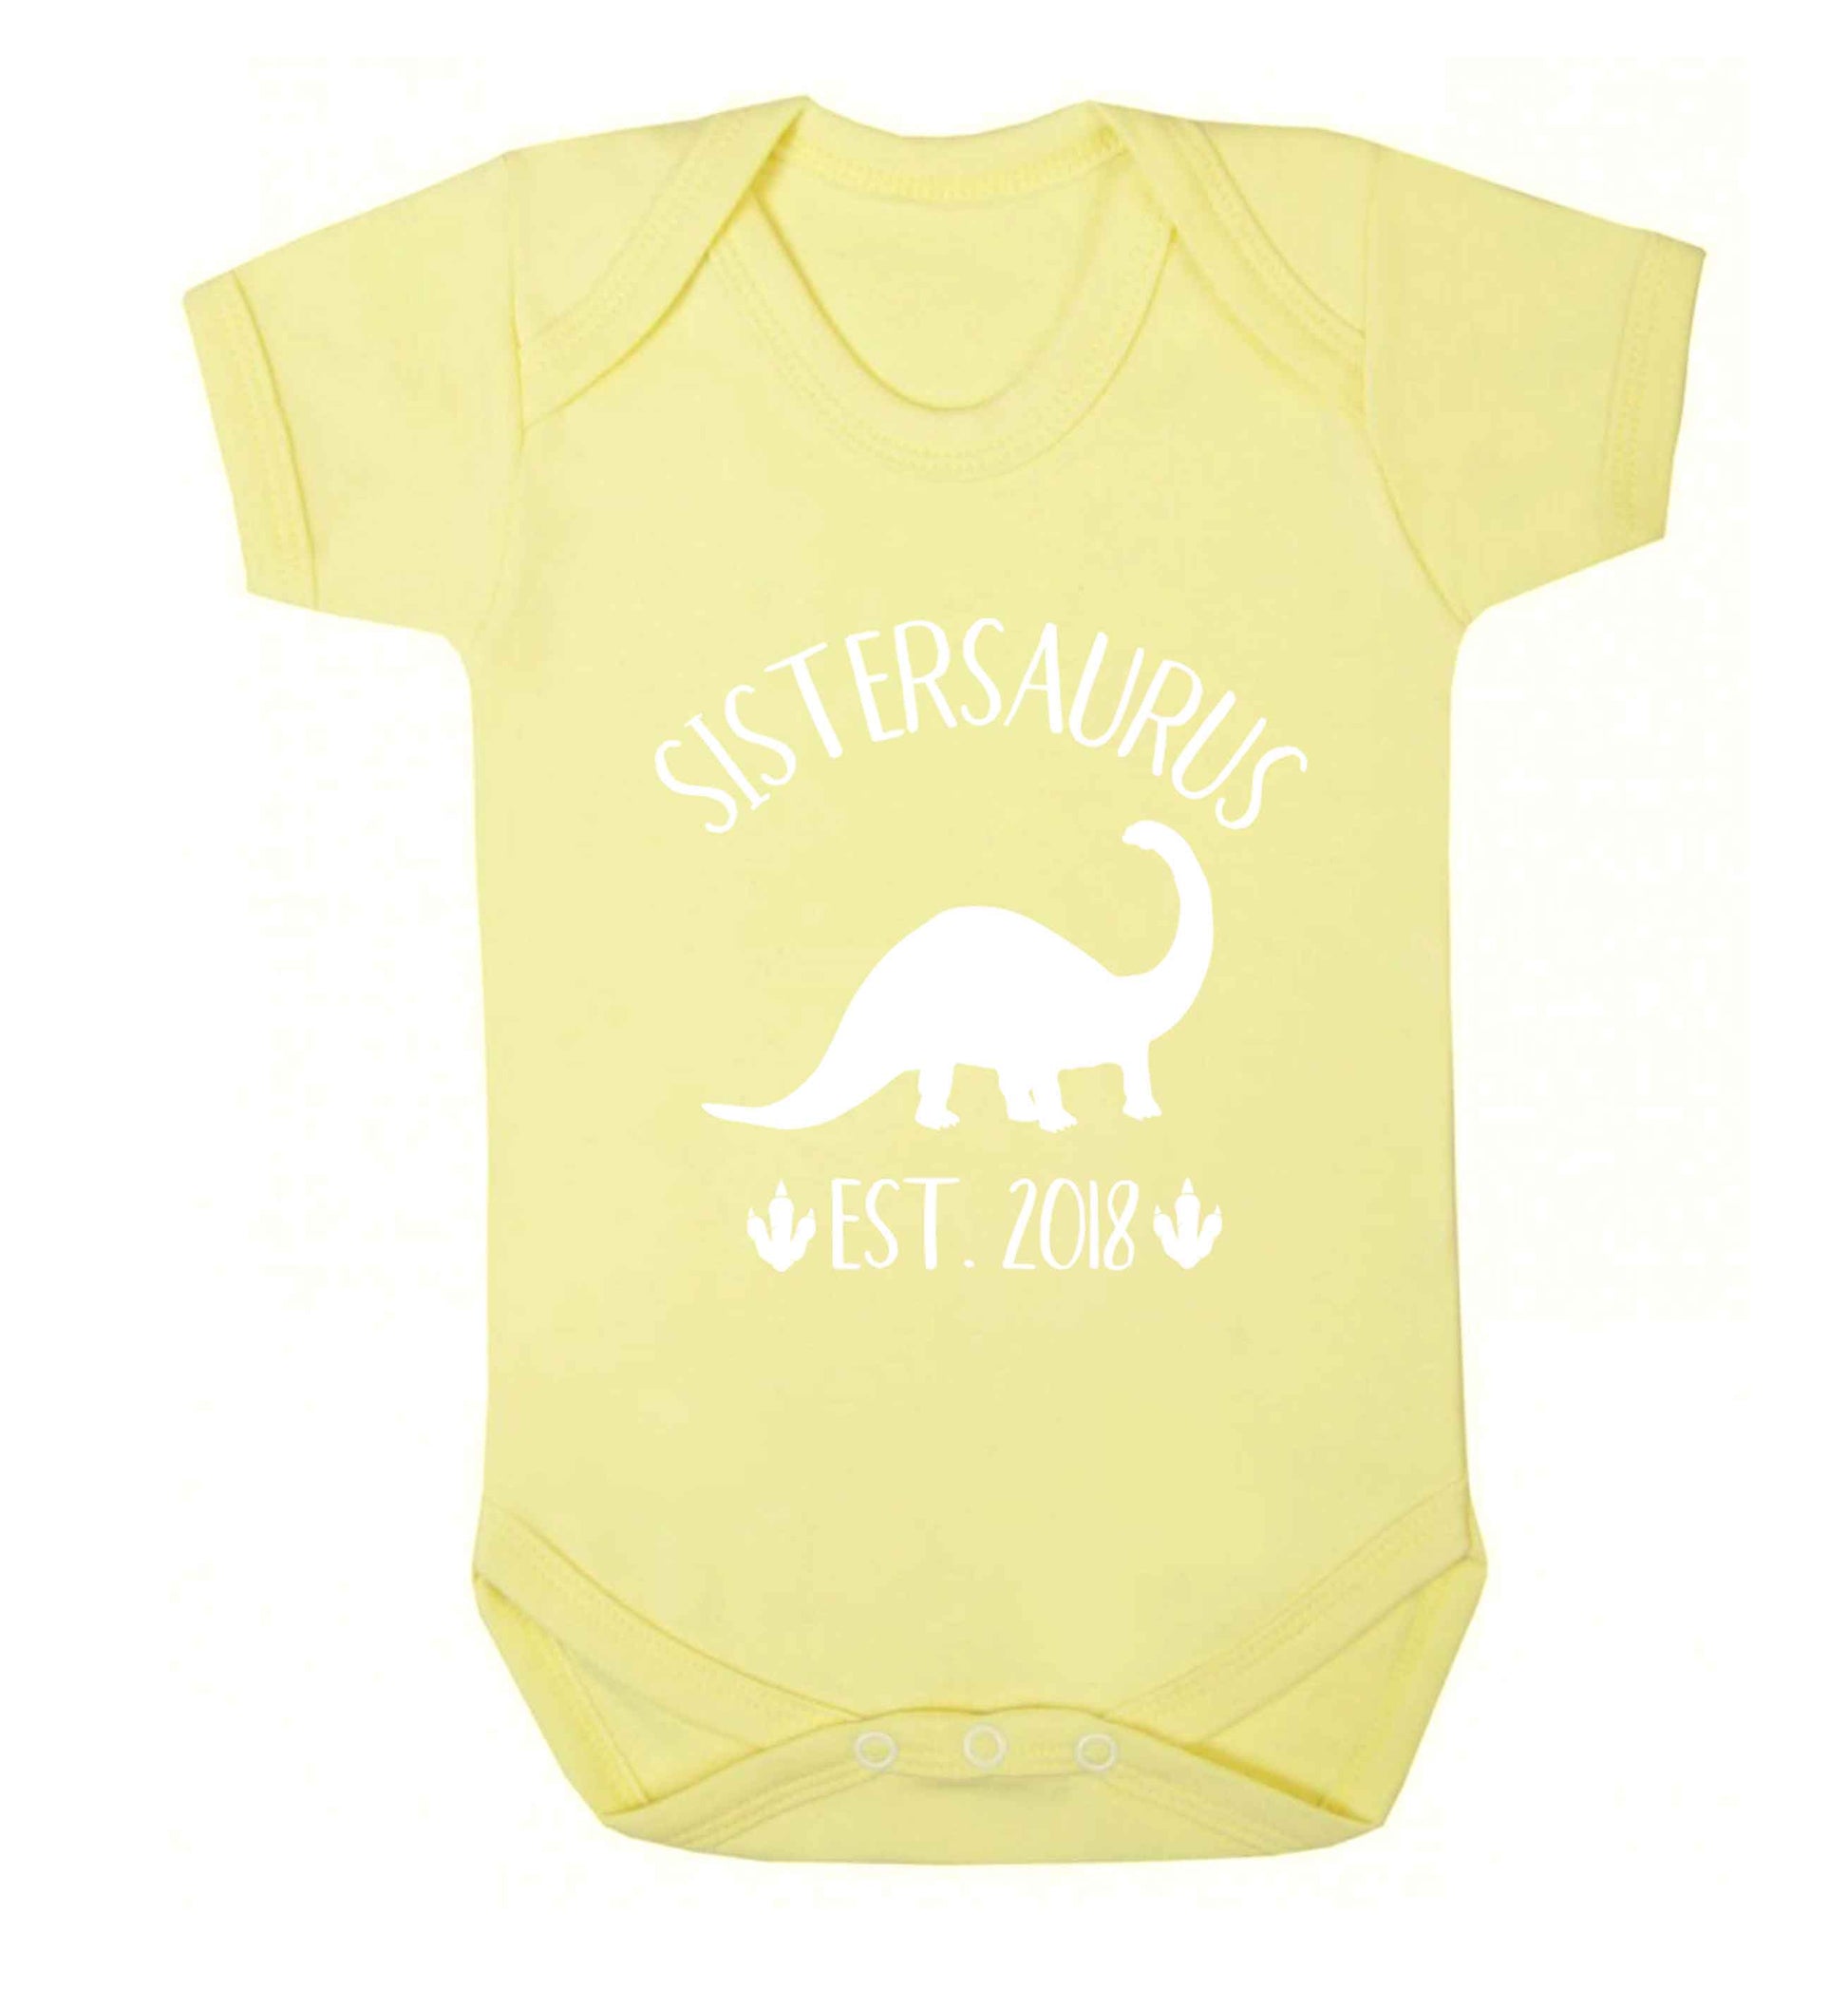 Personalised sistersaurus since (custom date) Baby Vest pale yellow 18-24 months